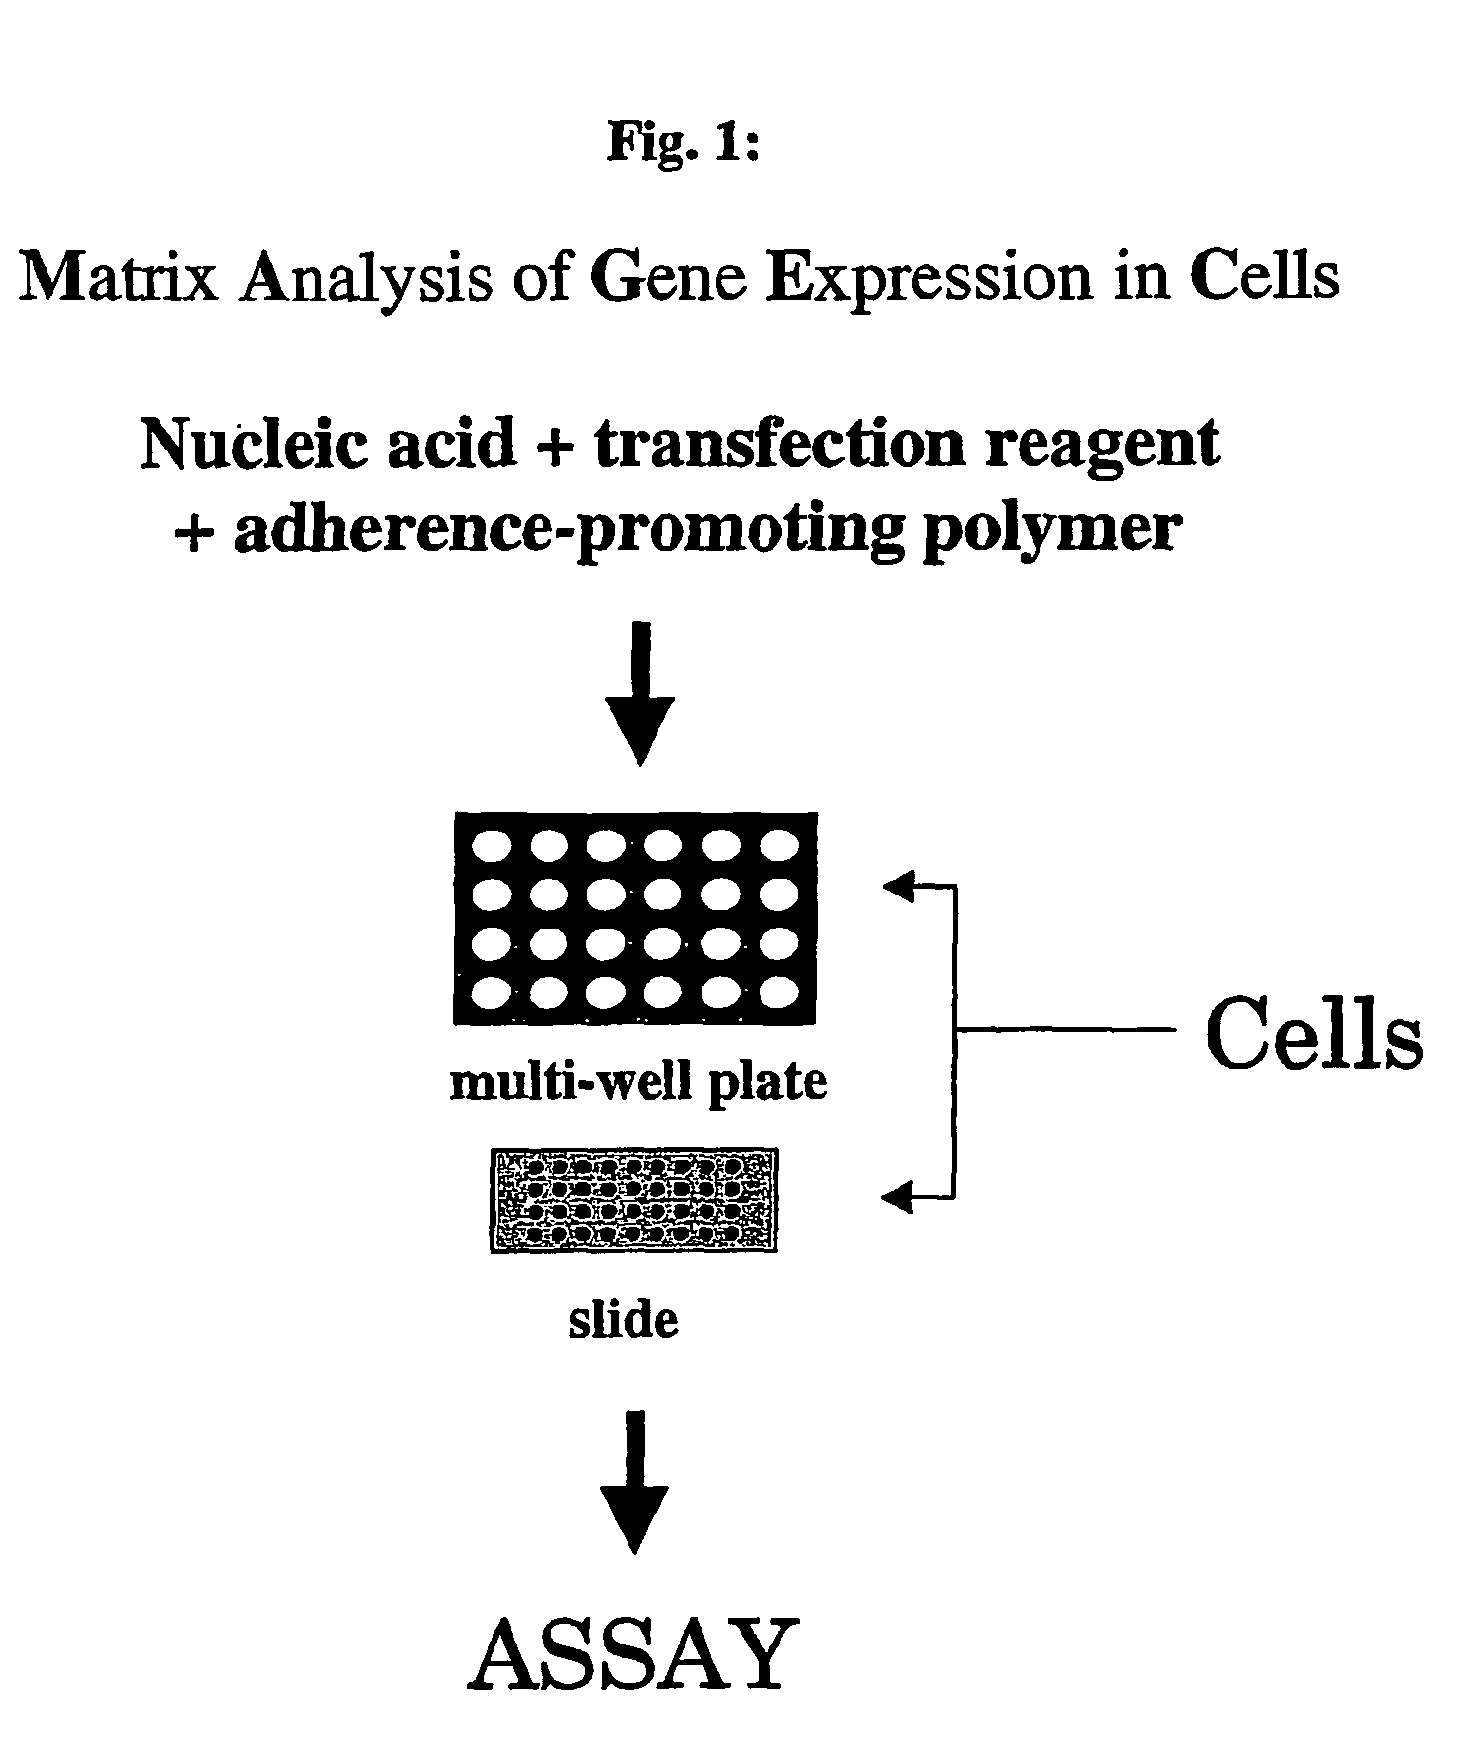 Matrix analysis of gene expression in cells (magec)